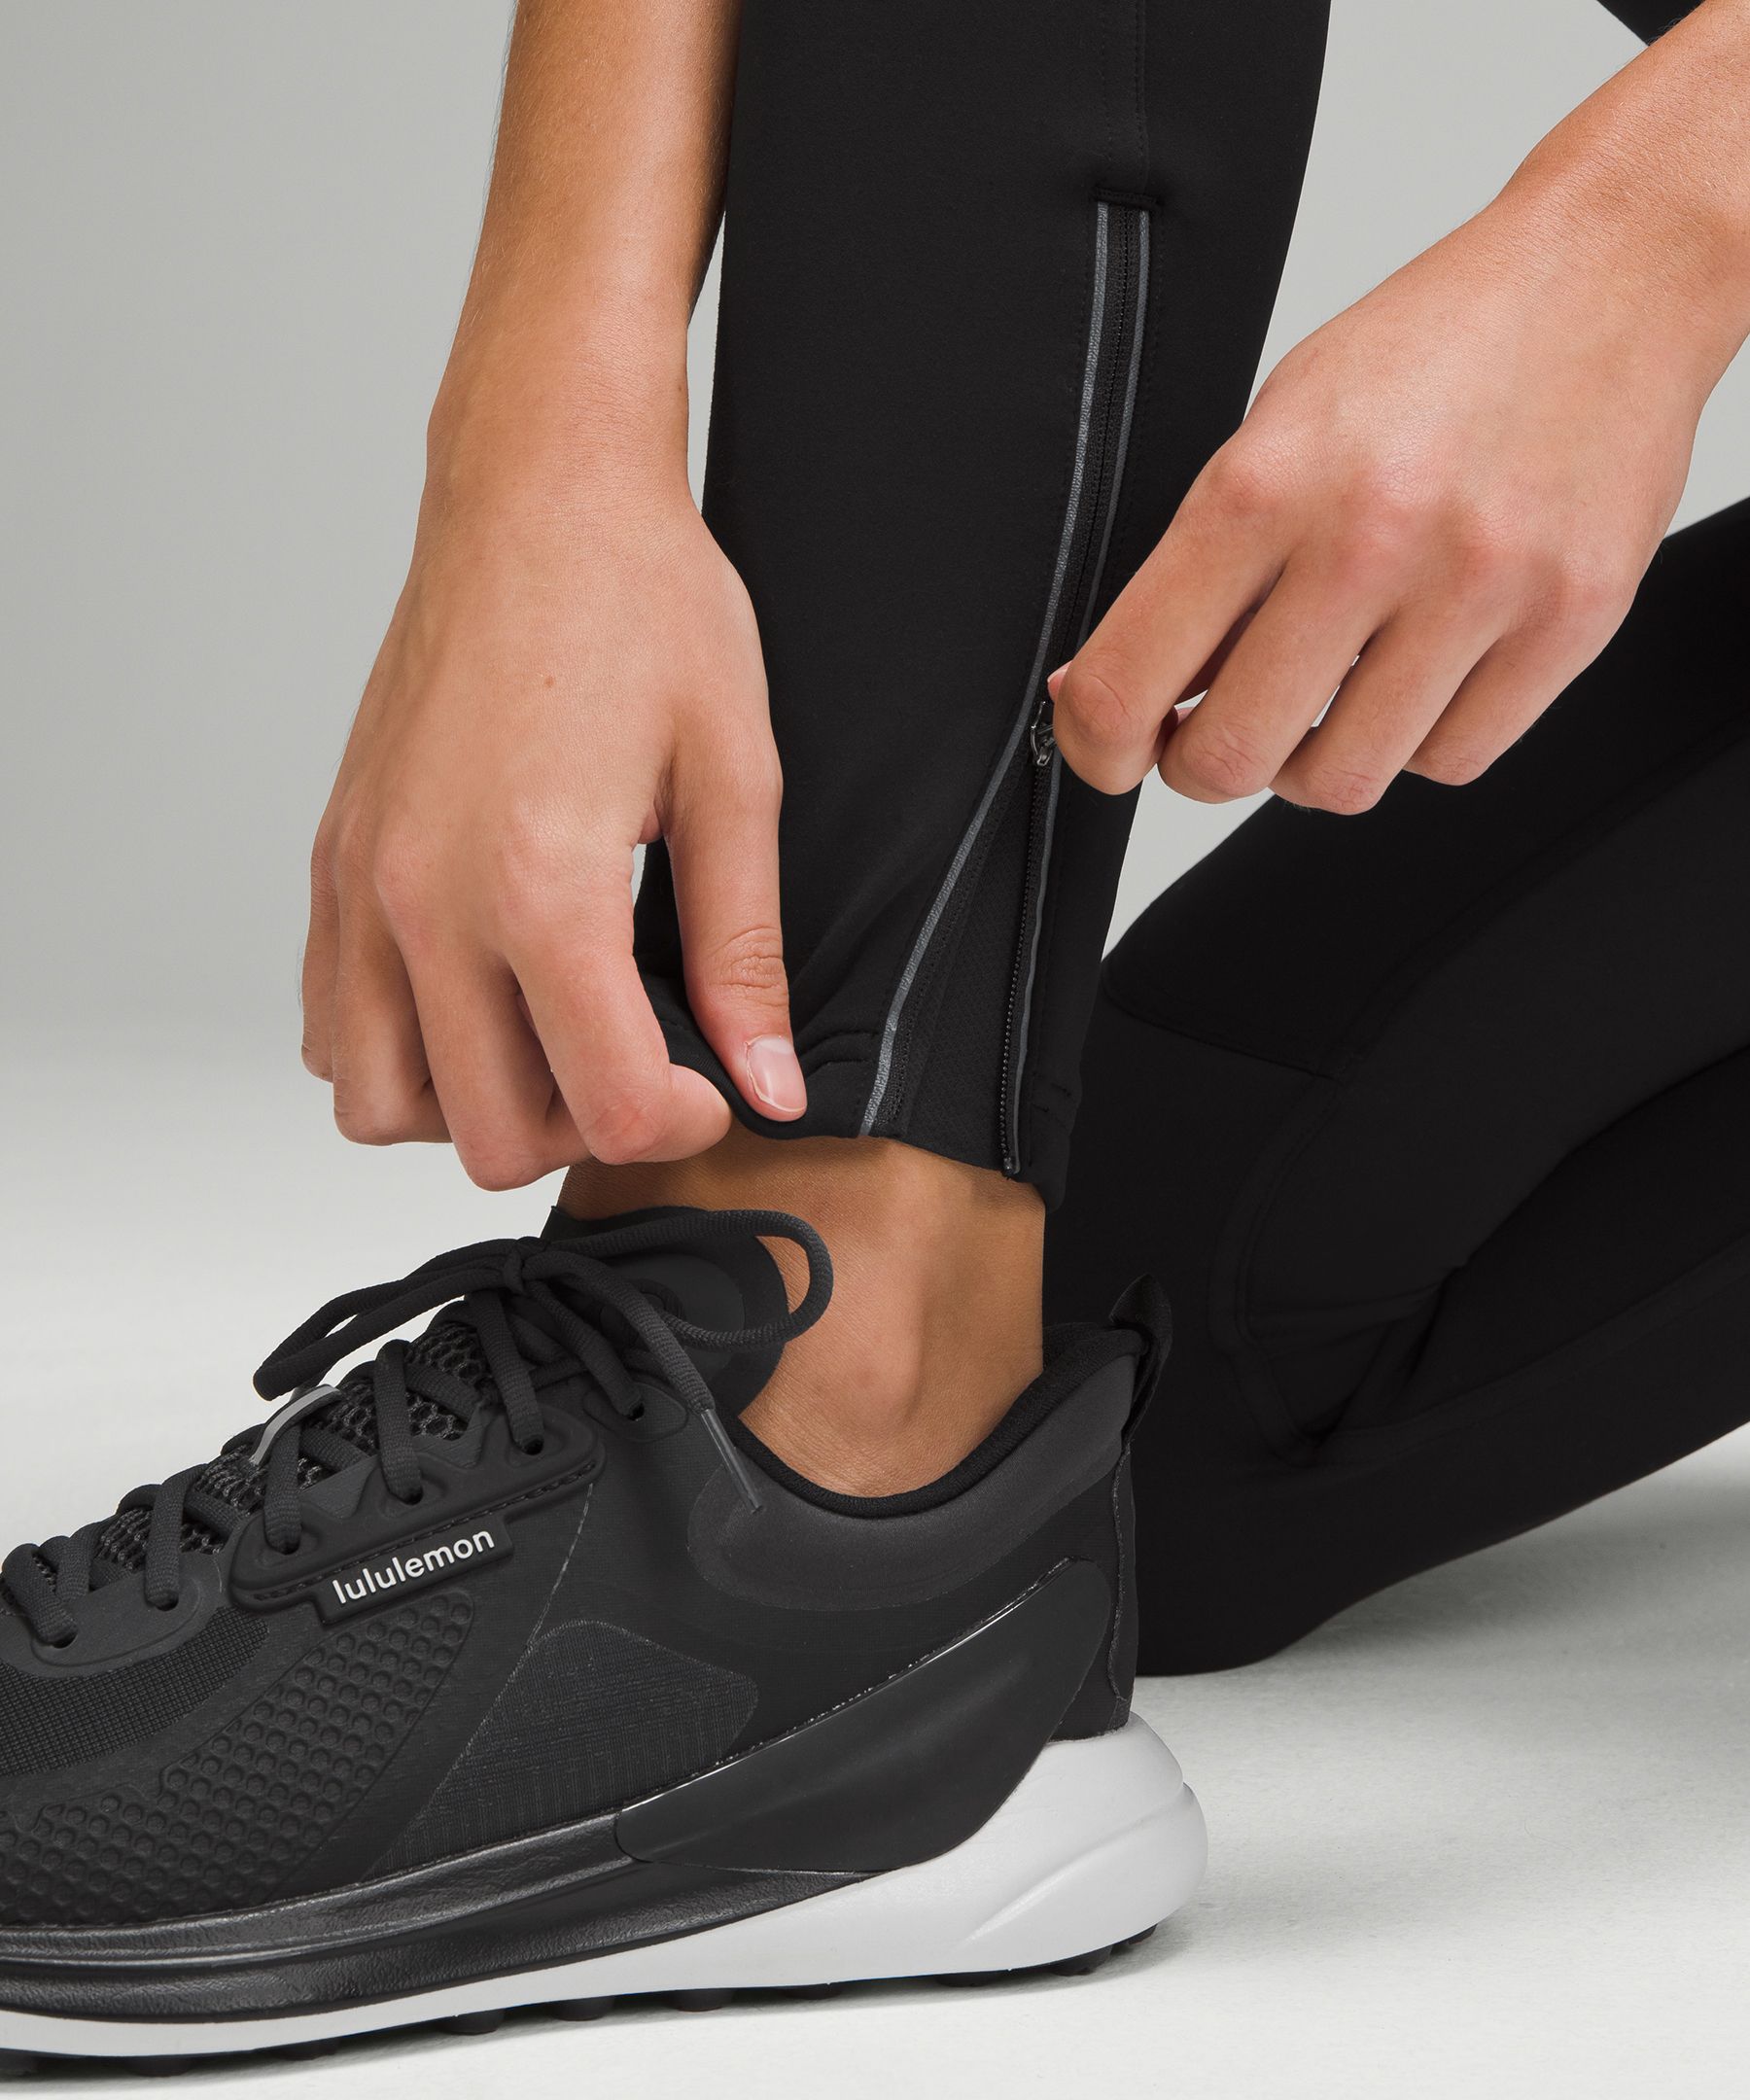 Lululemon Reveal Tight Leggings Black Size 8 - $73 (41% Off Retail